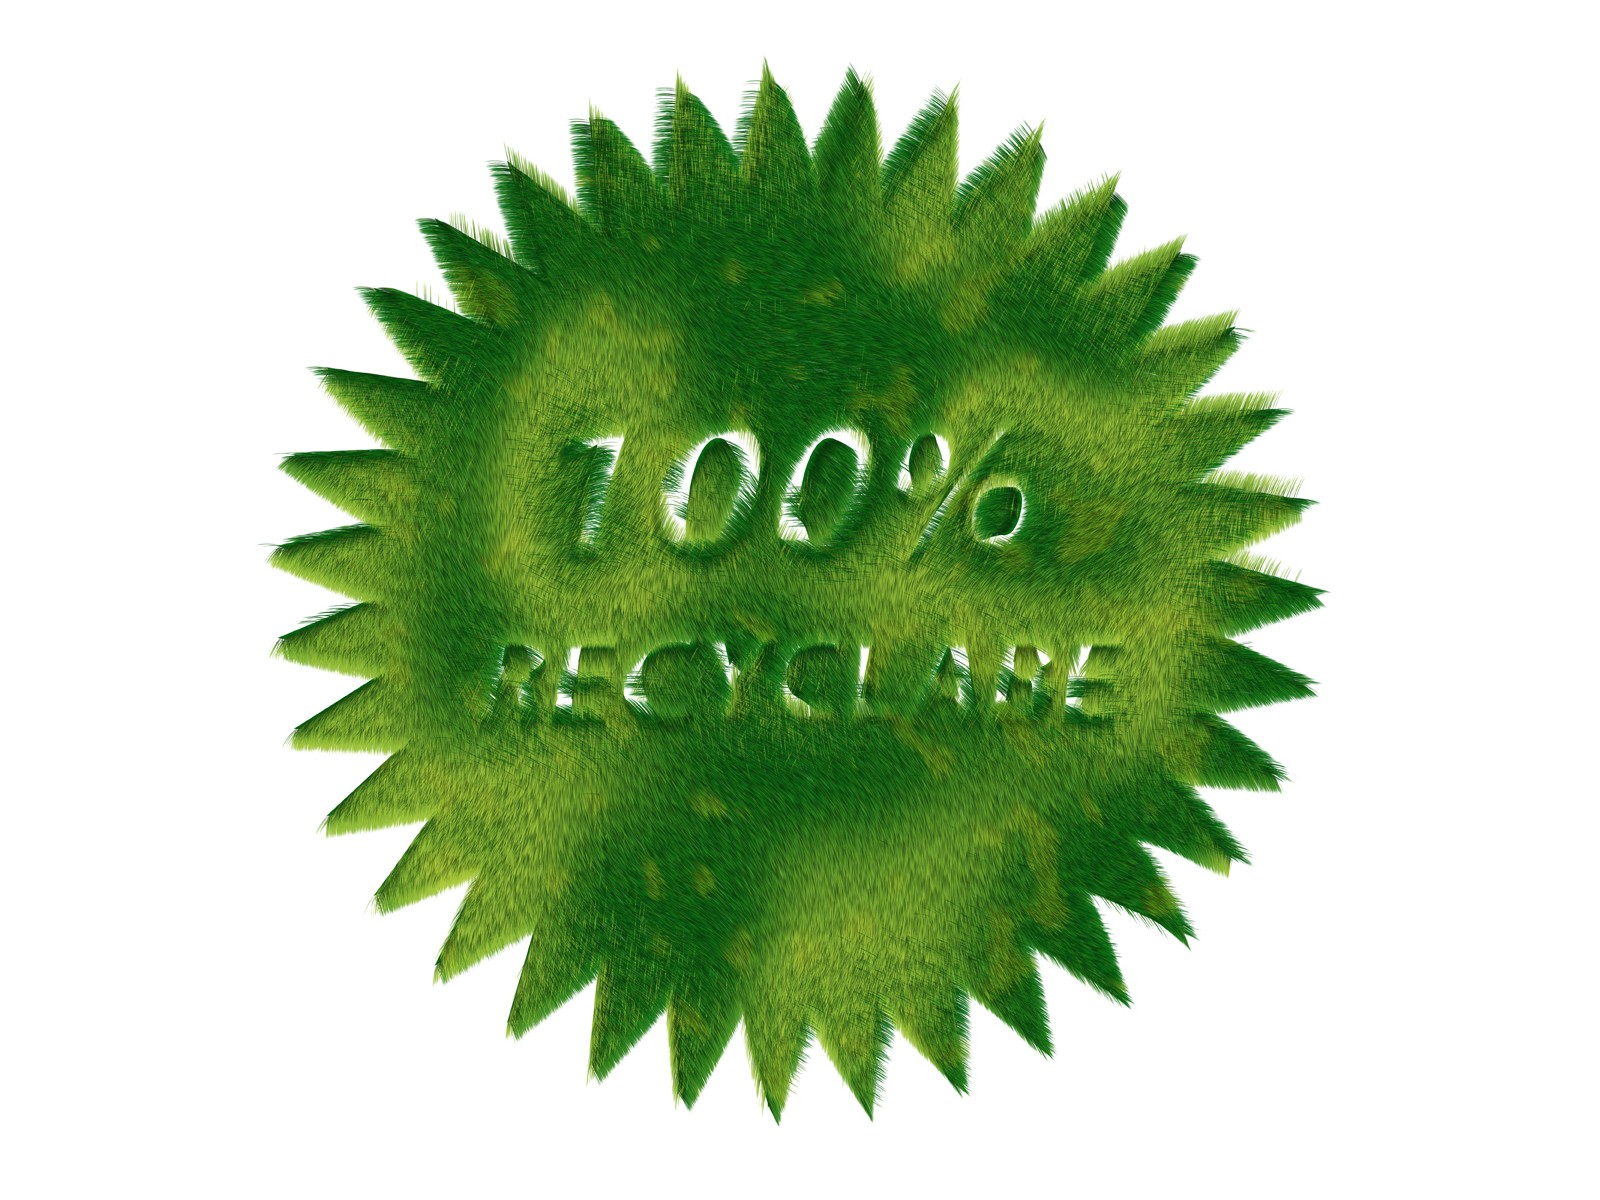 Eco-Friendly Symbols - Recycle symbols and Environmental Green ...